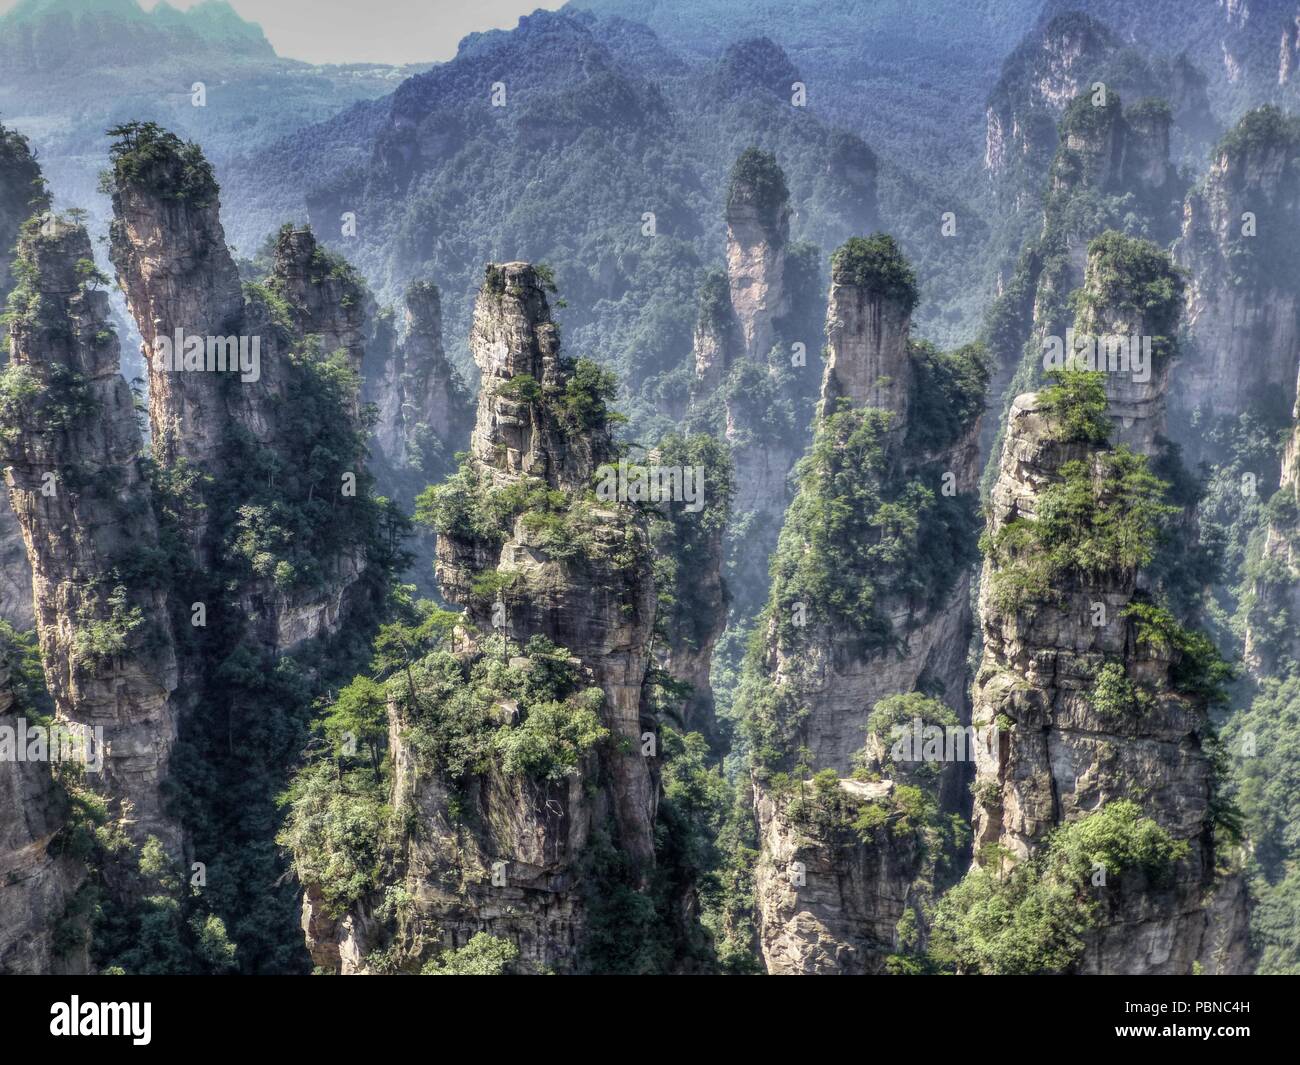 Zhangjiajie National Park China Avatar Mountains Stock Image  Image of  hunnan landscape 145472377